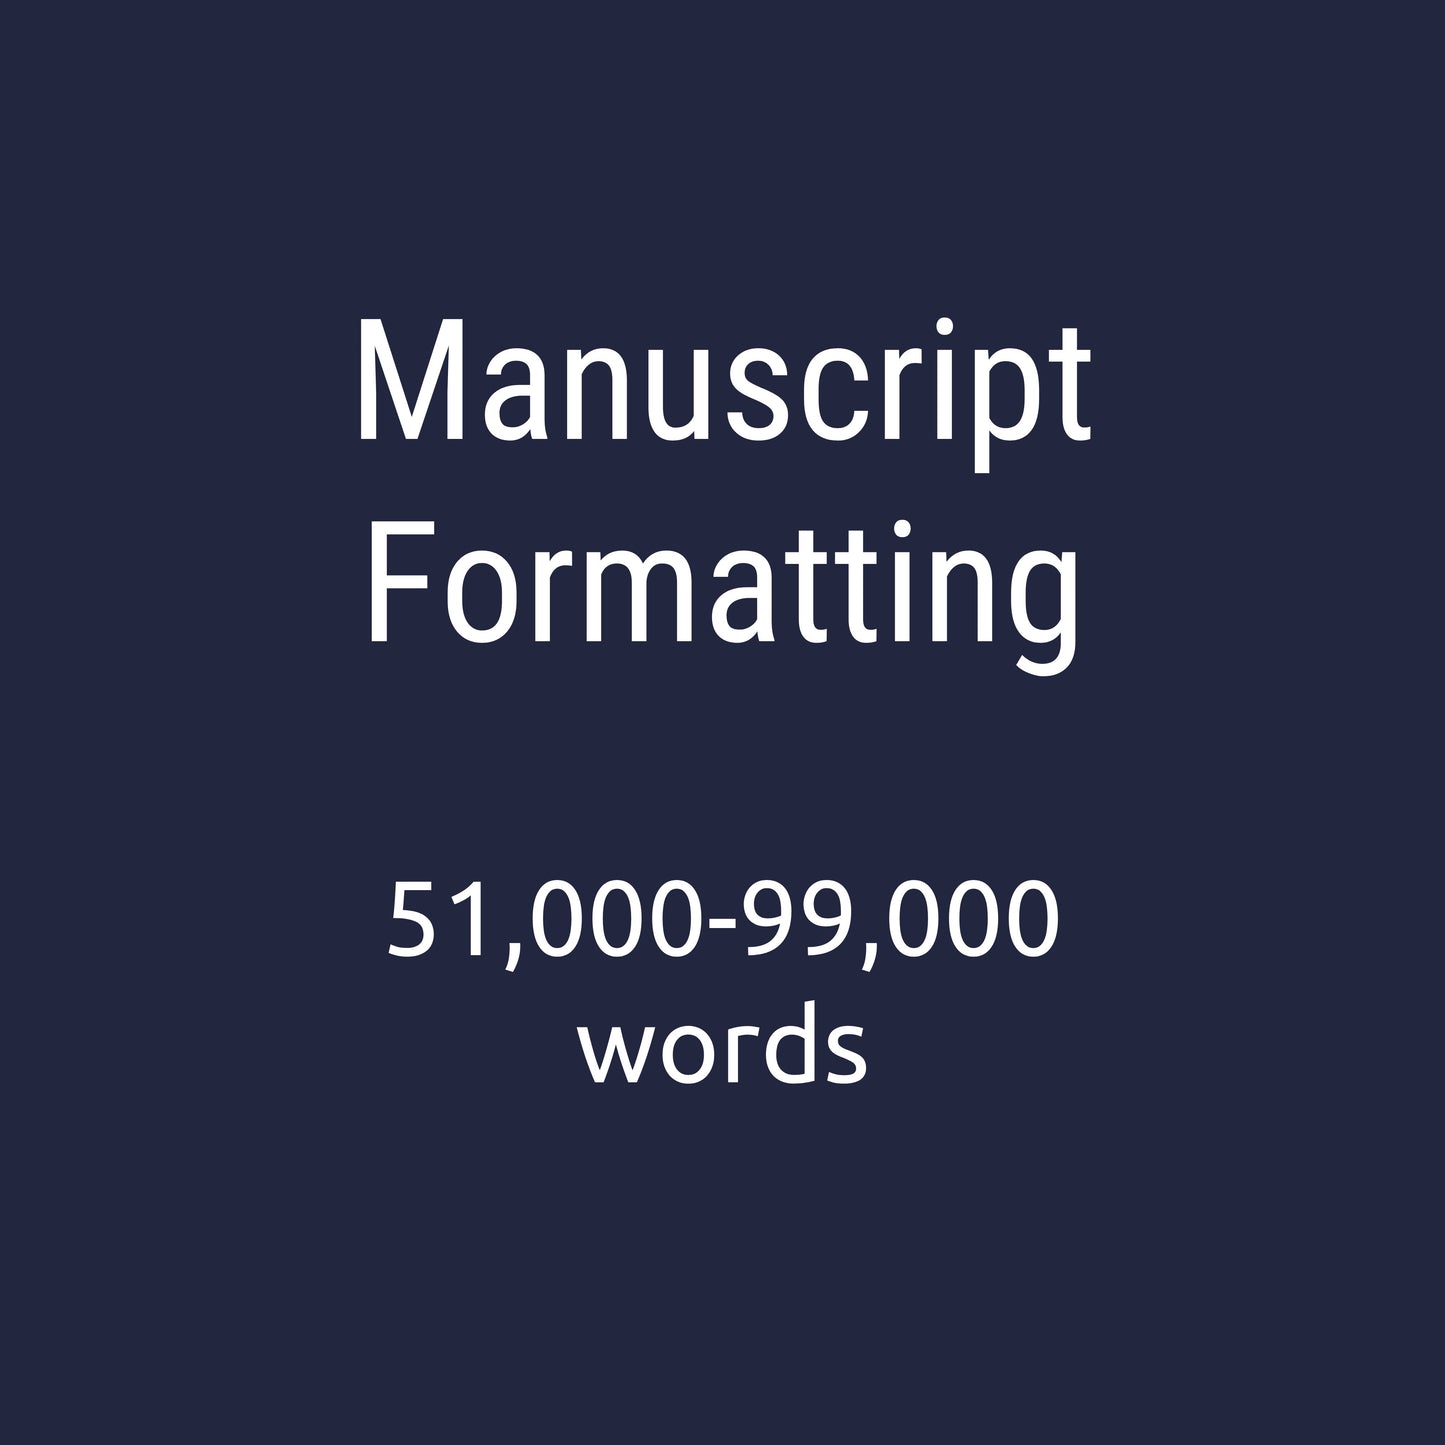 Manuscript formatting (51,000-99,000 words)